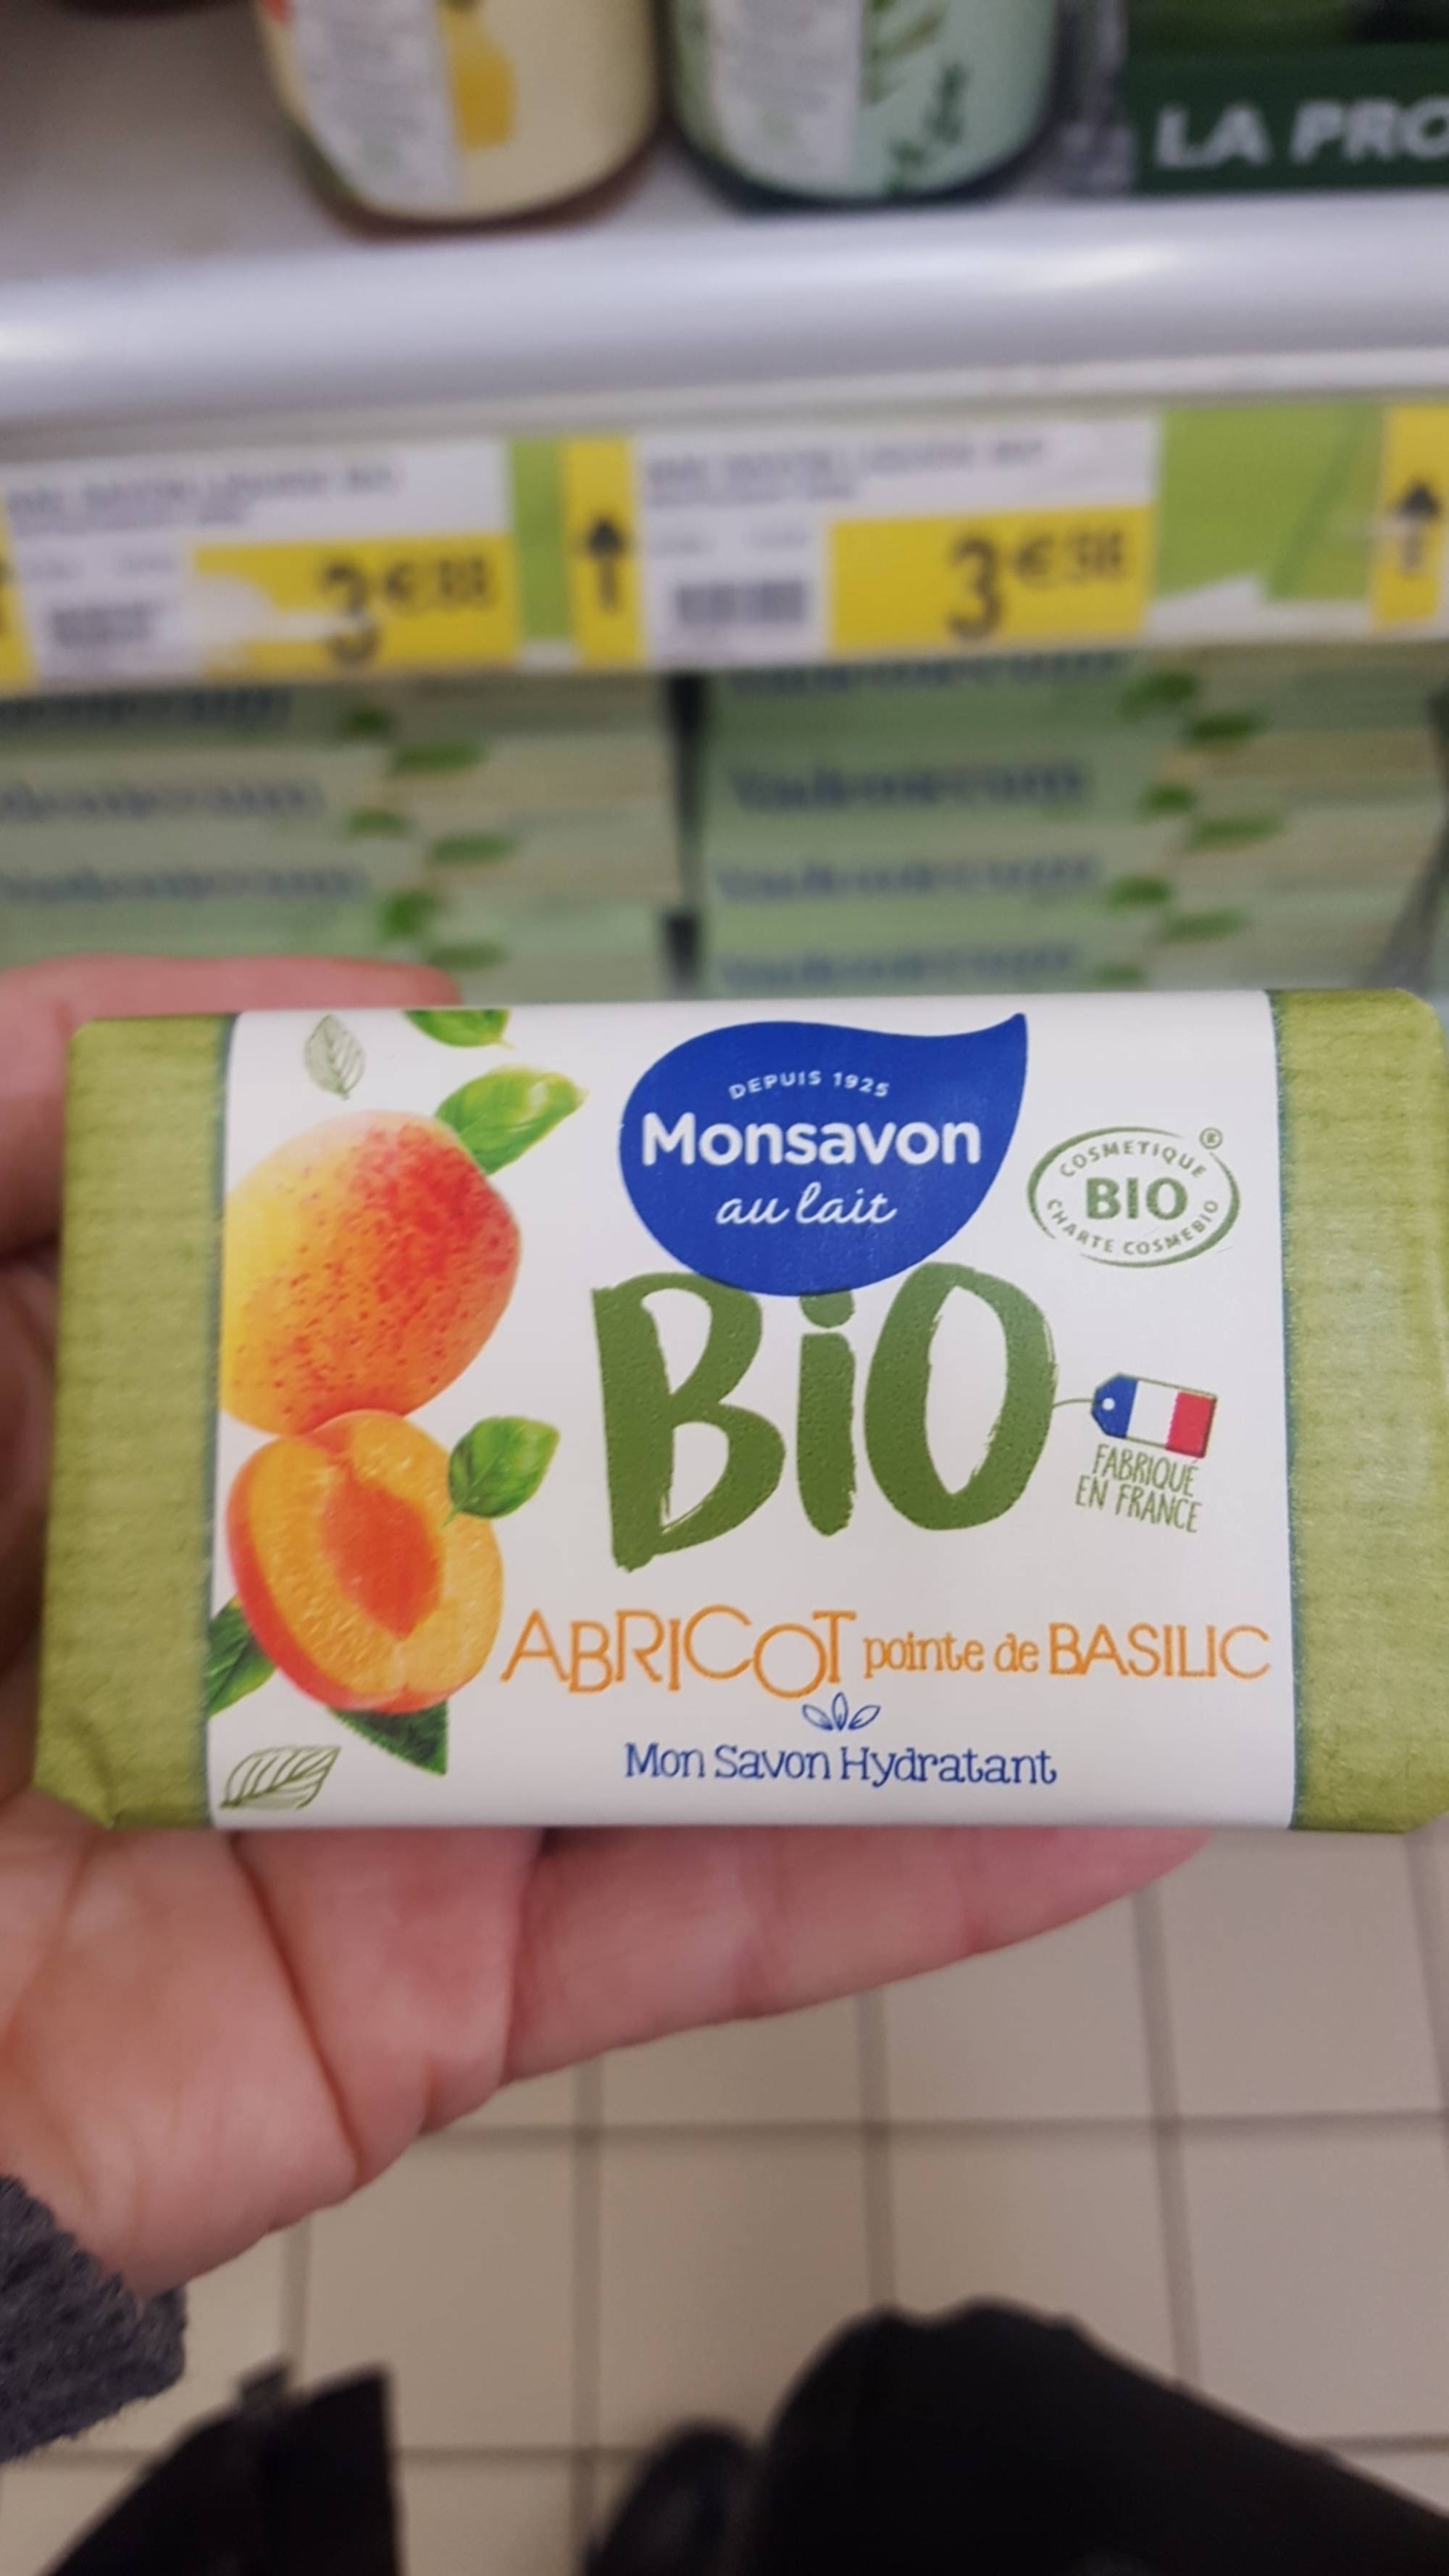 MONSAVON - Bio abricot pointe de basilic - Mon savon hydratant